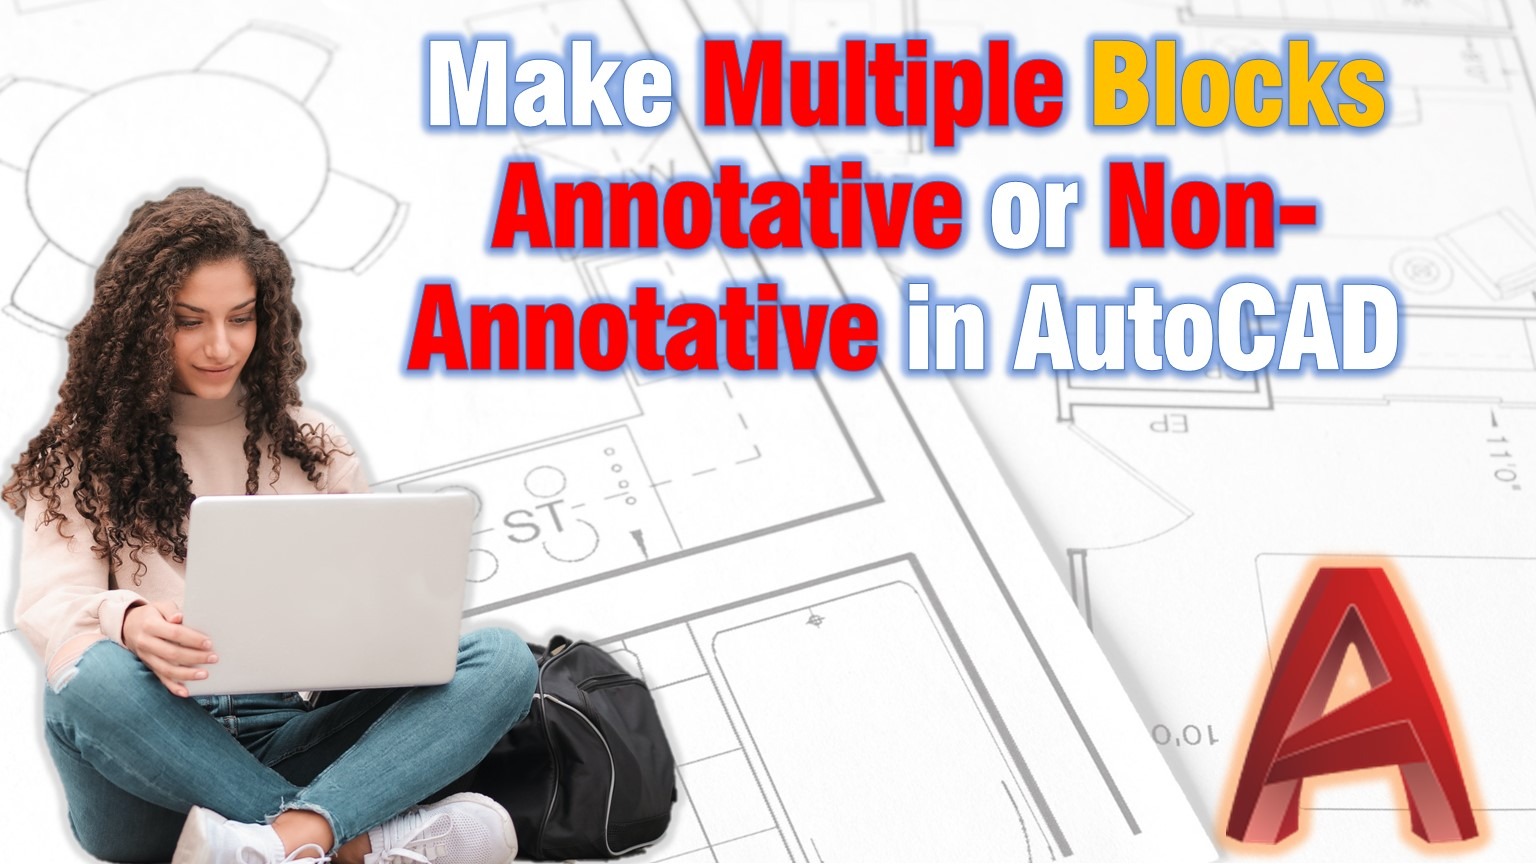 Make multiple blocks annotative or non annotative in AutoCAD